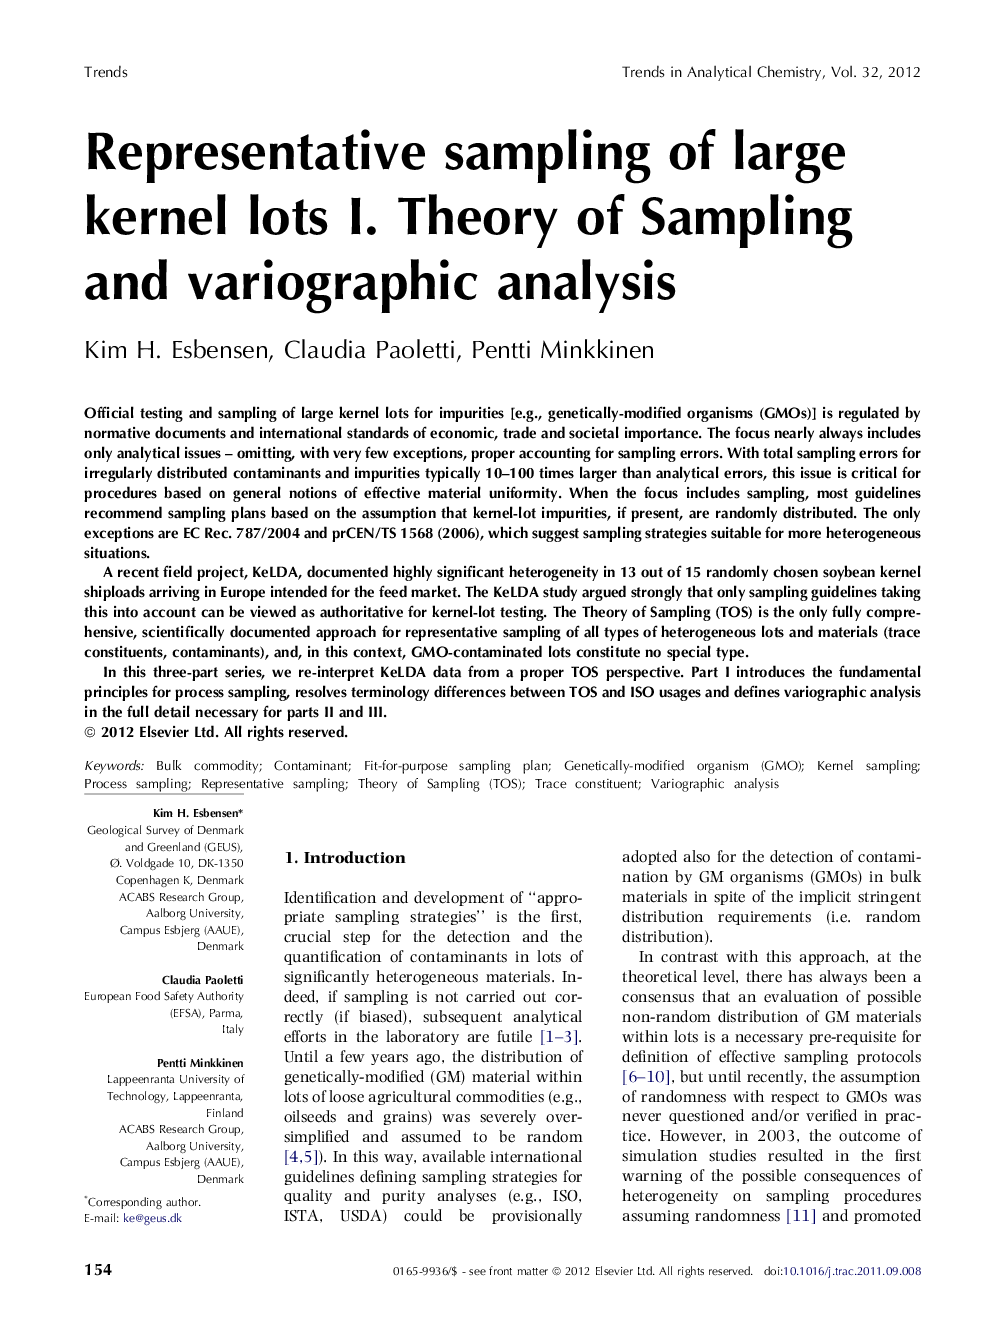 Representative sampling of large kernel lots I. Theory of Sampling and variographic analysis